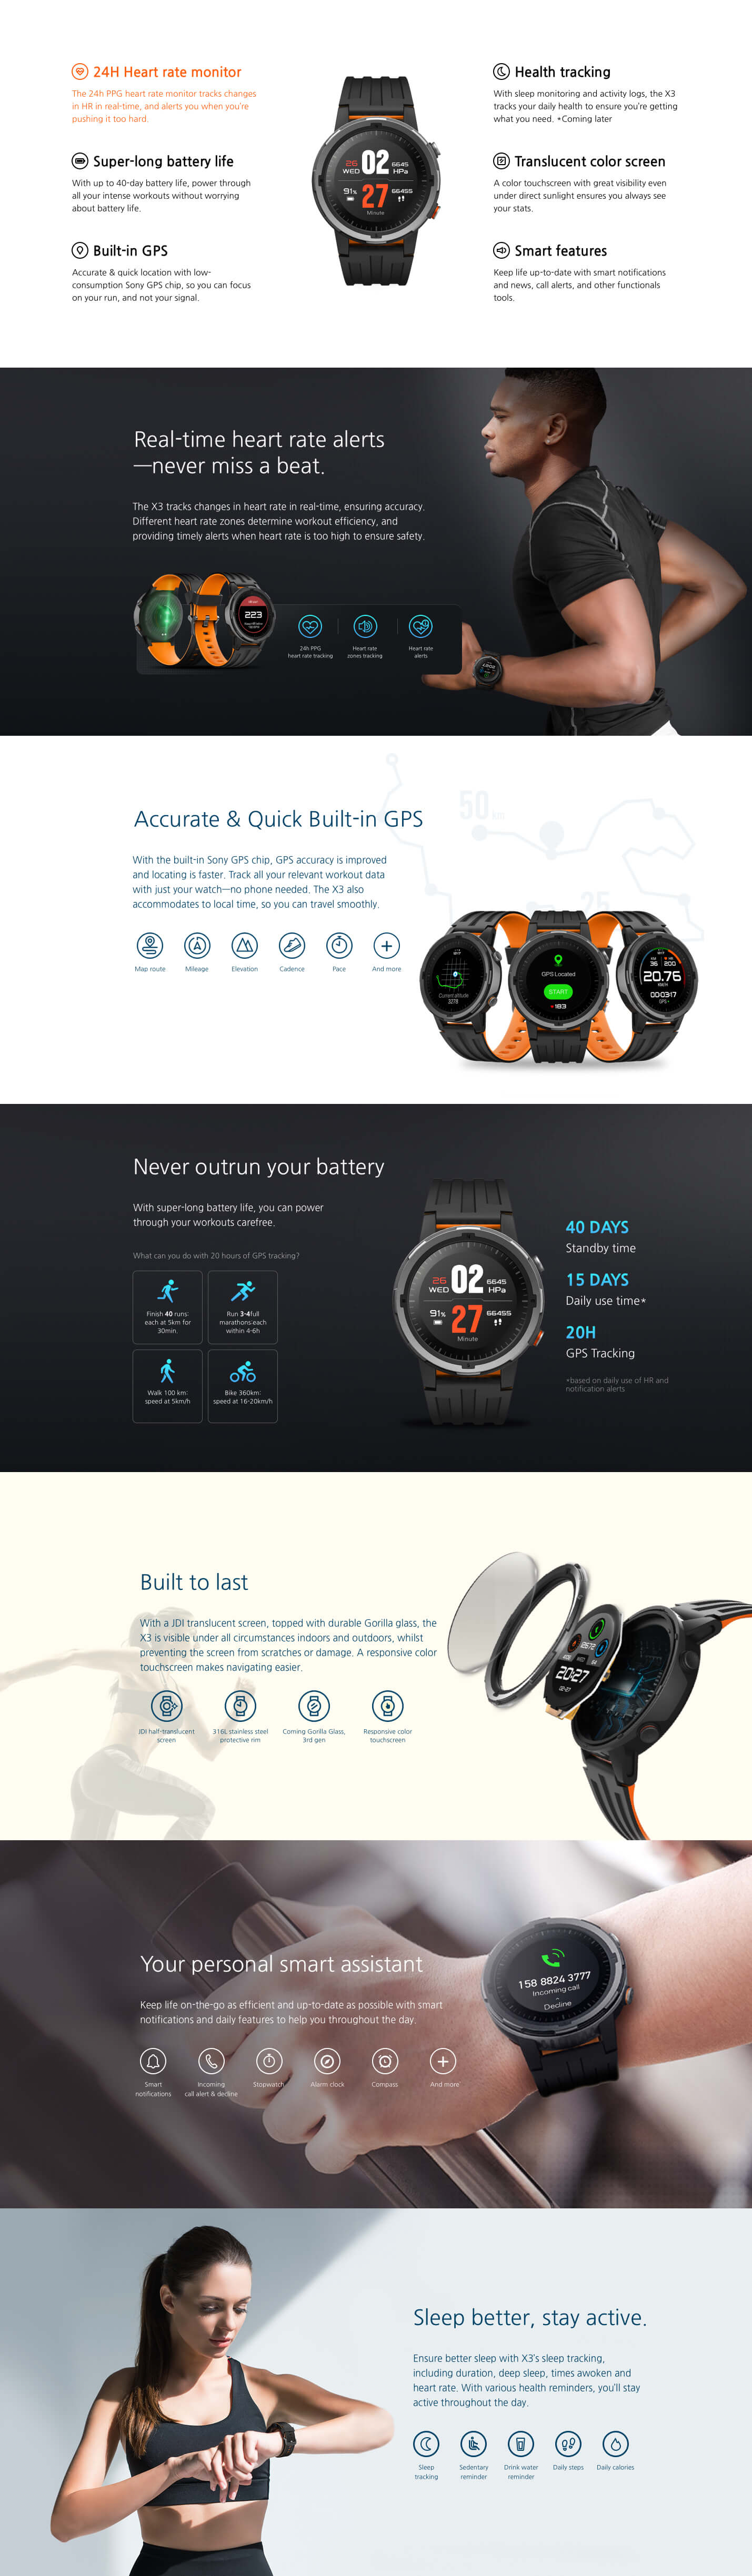 Runtopia X3 | The Running Watch With 40 Days Battery Life – RuntopiaSports